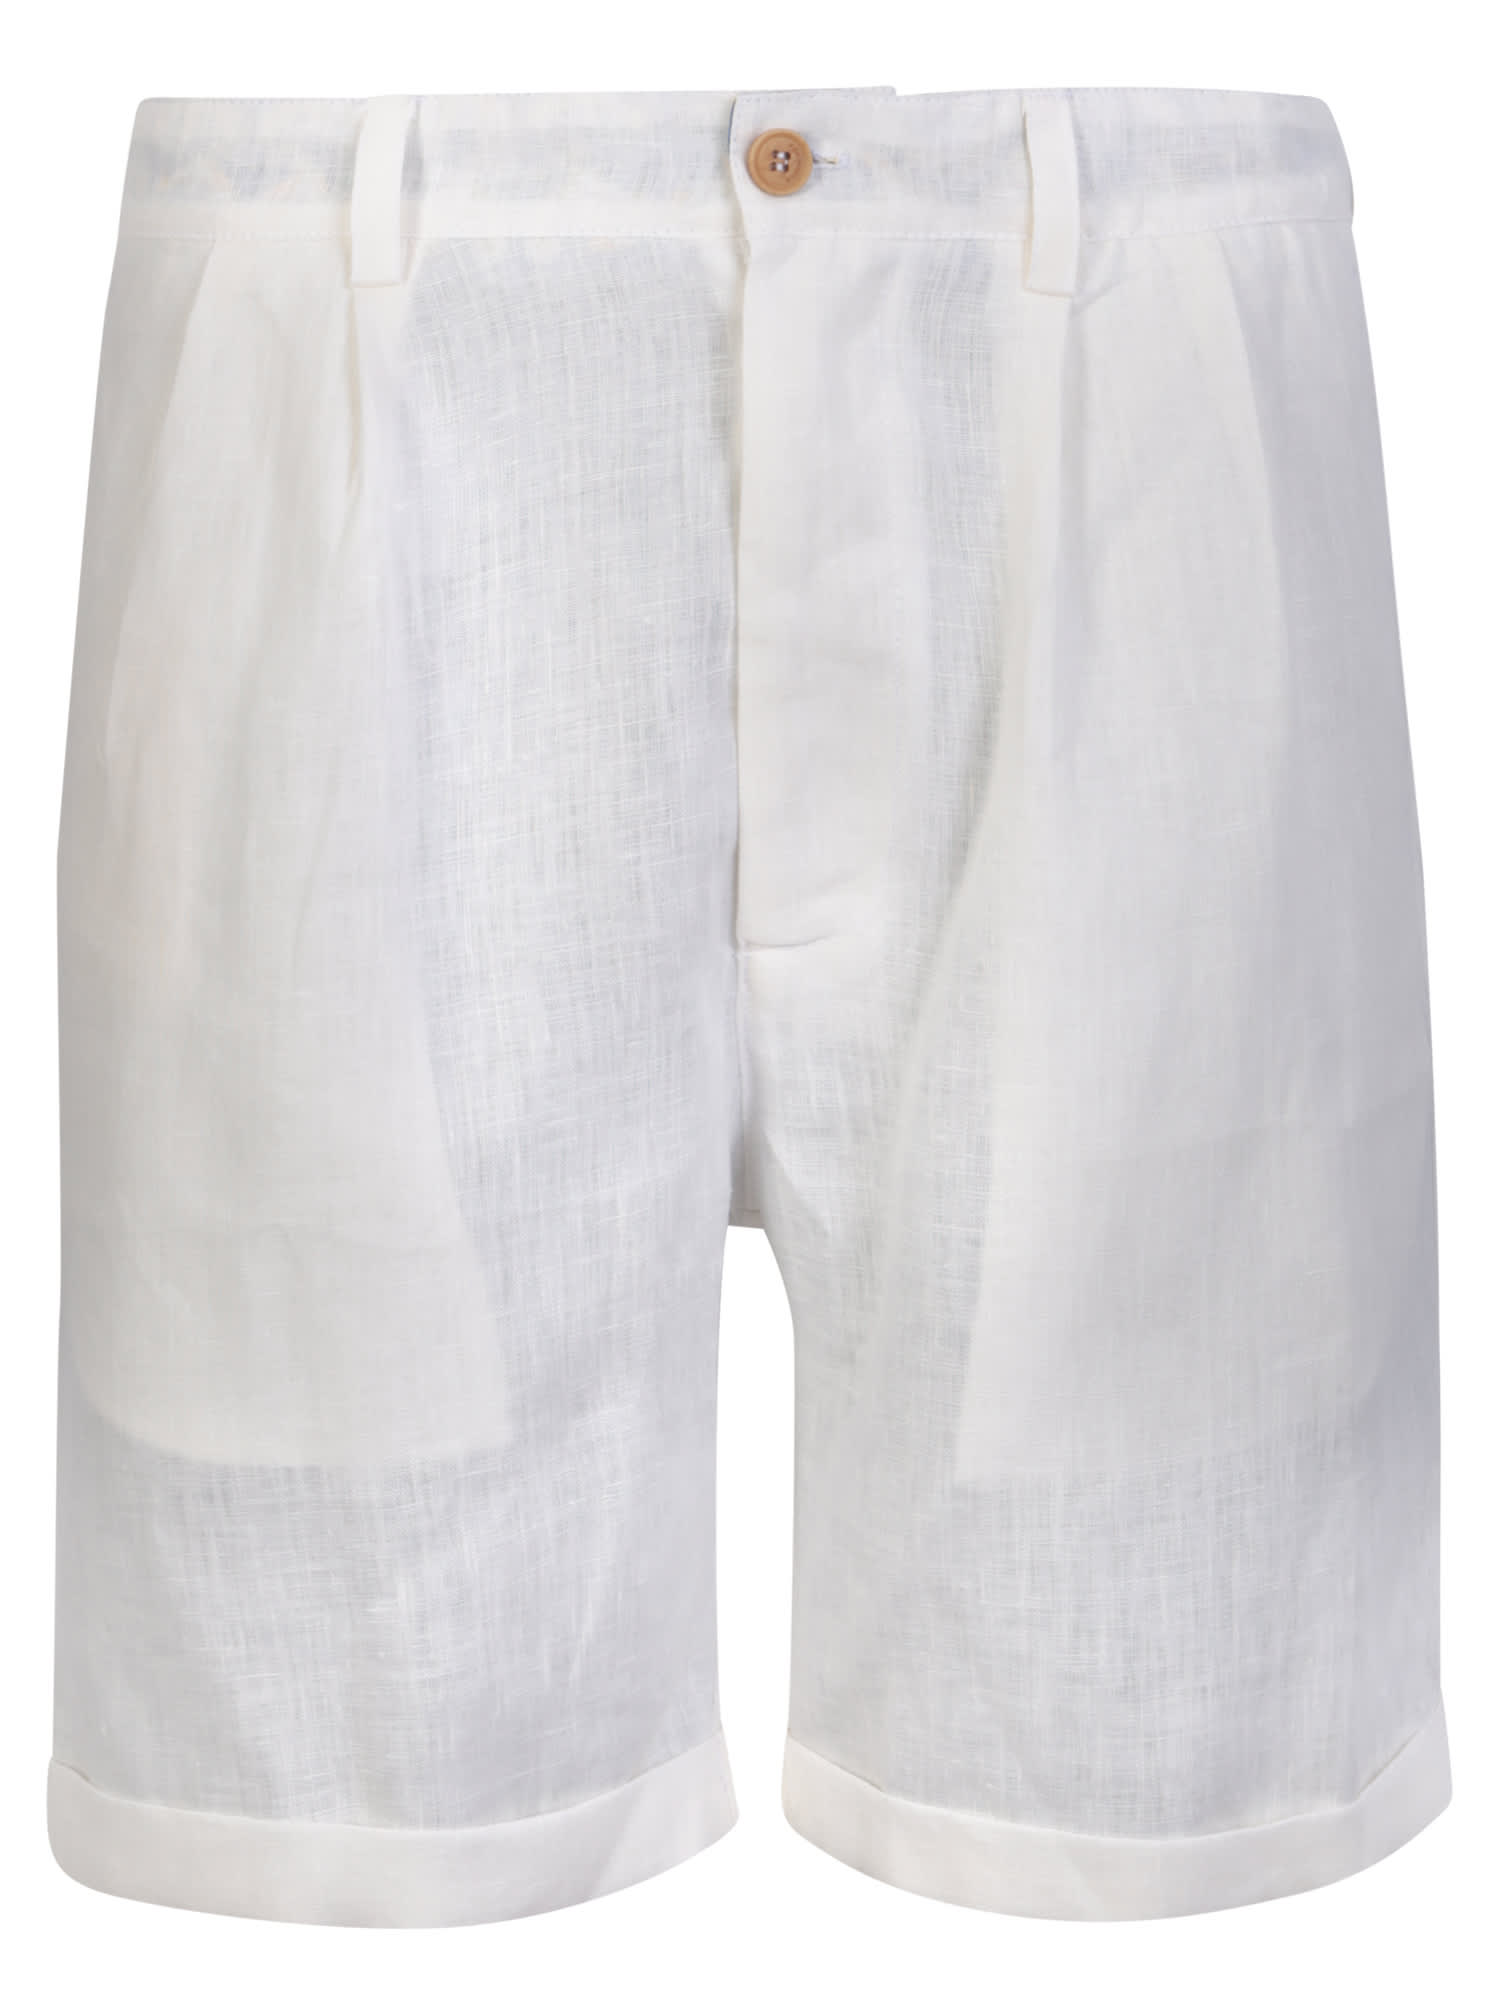 Marzamemi Linen White Shorts